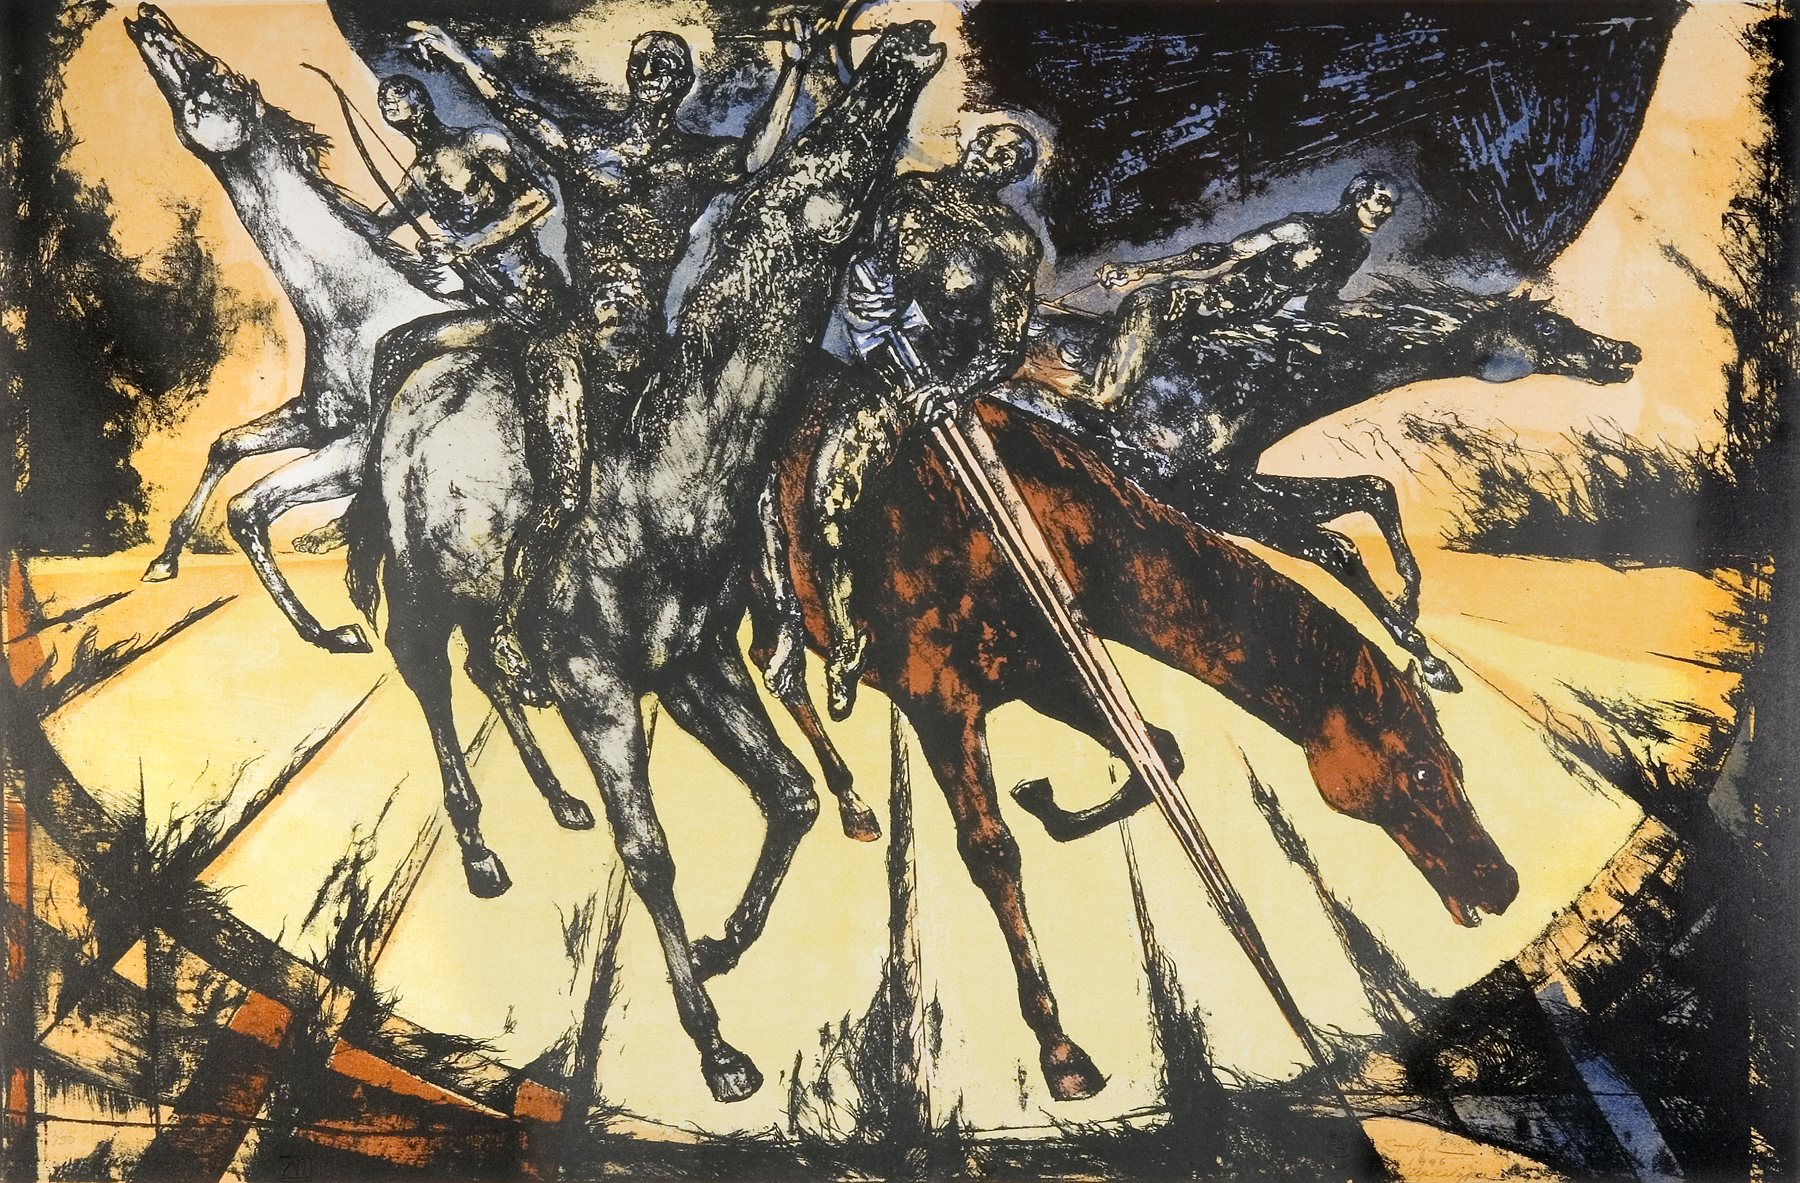 Armageddon Four Horsemen Of The Apocalypse Occult 1800x1183